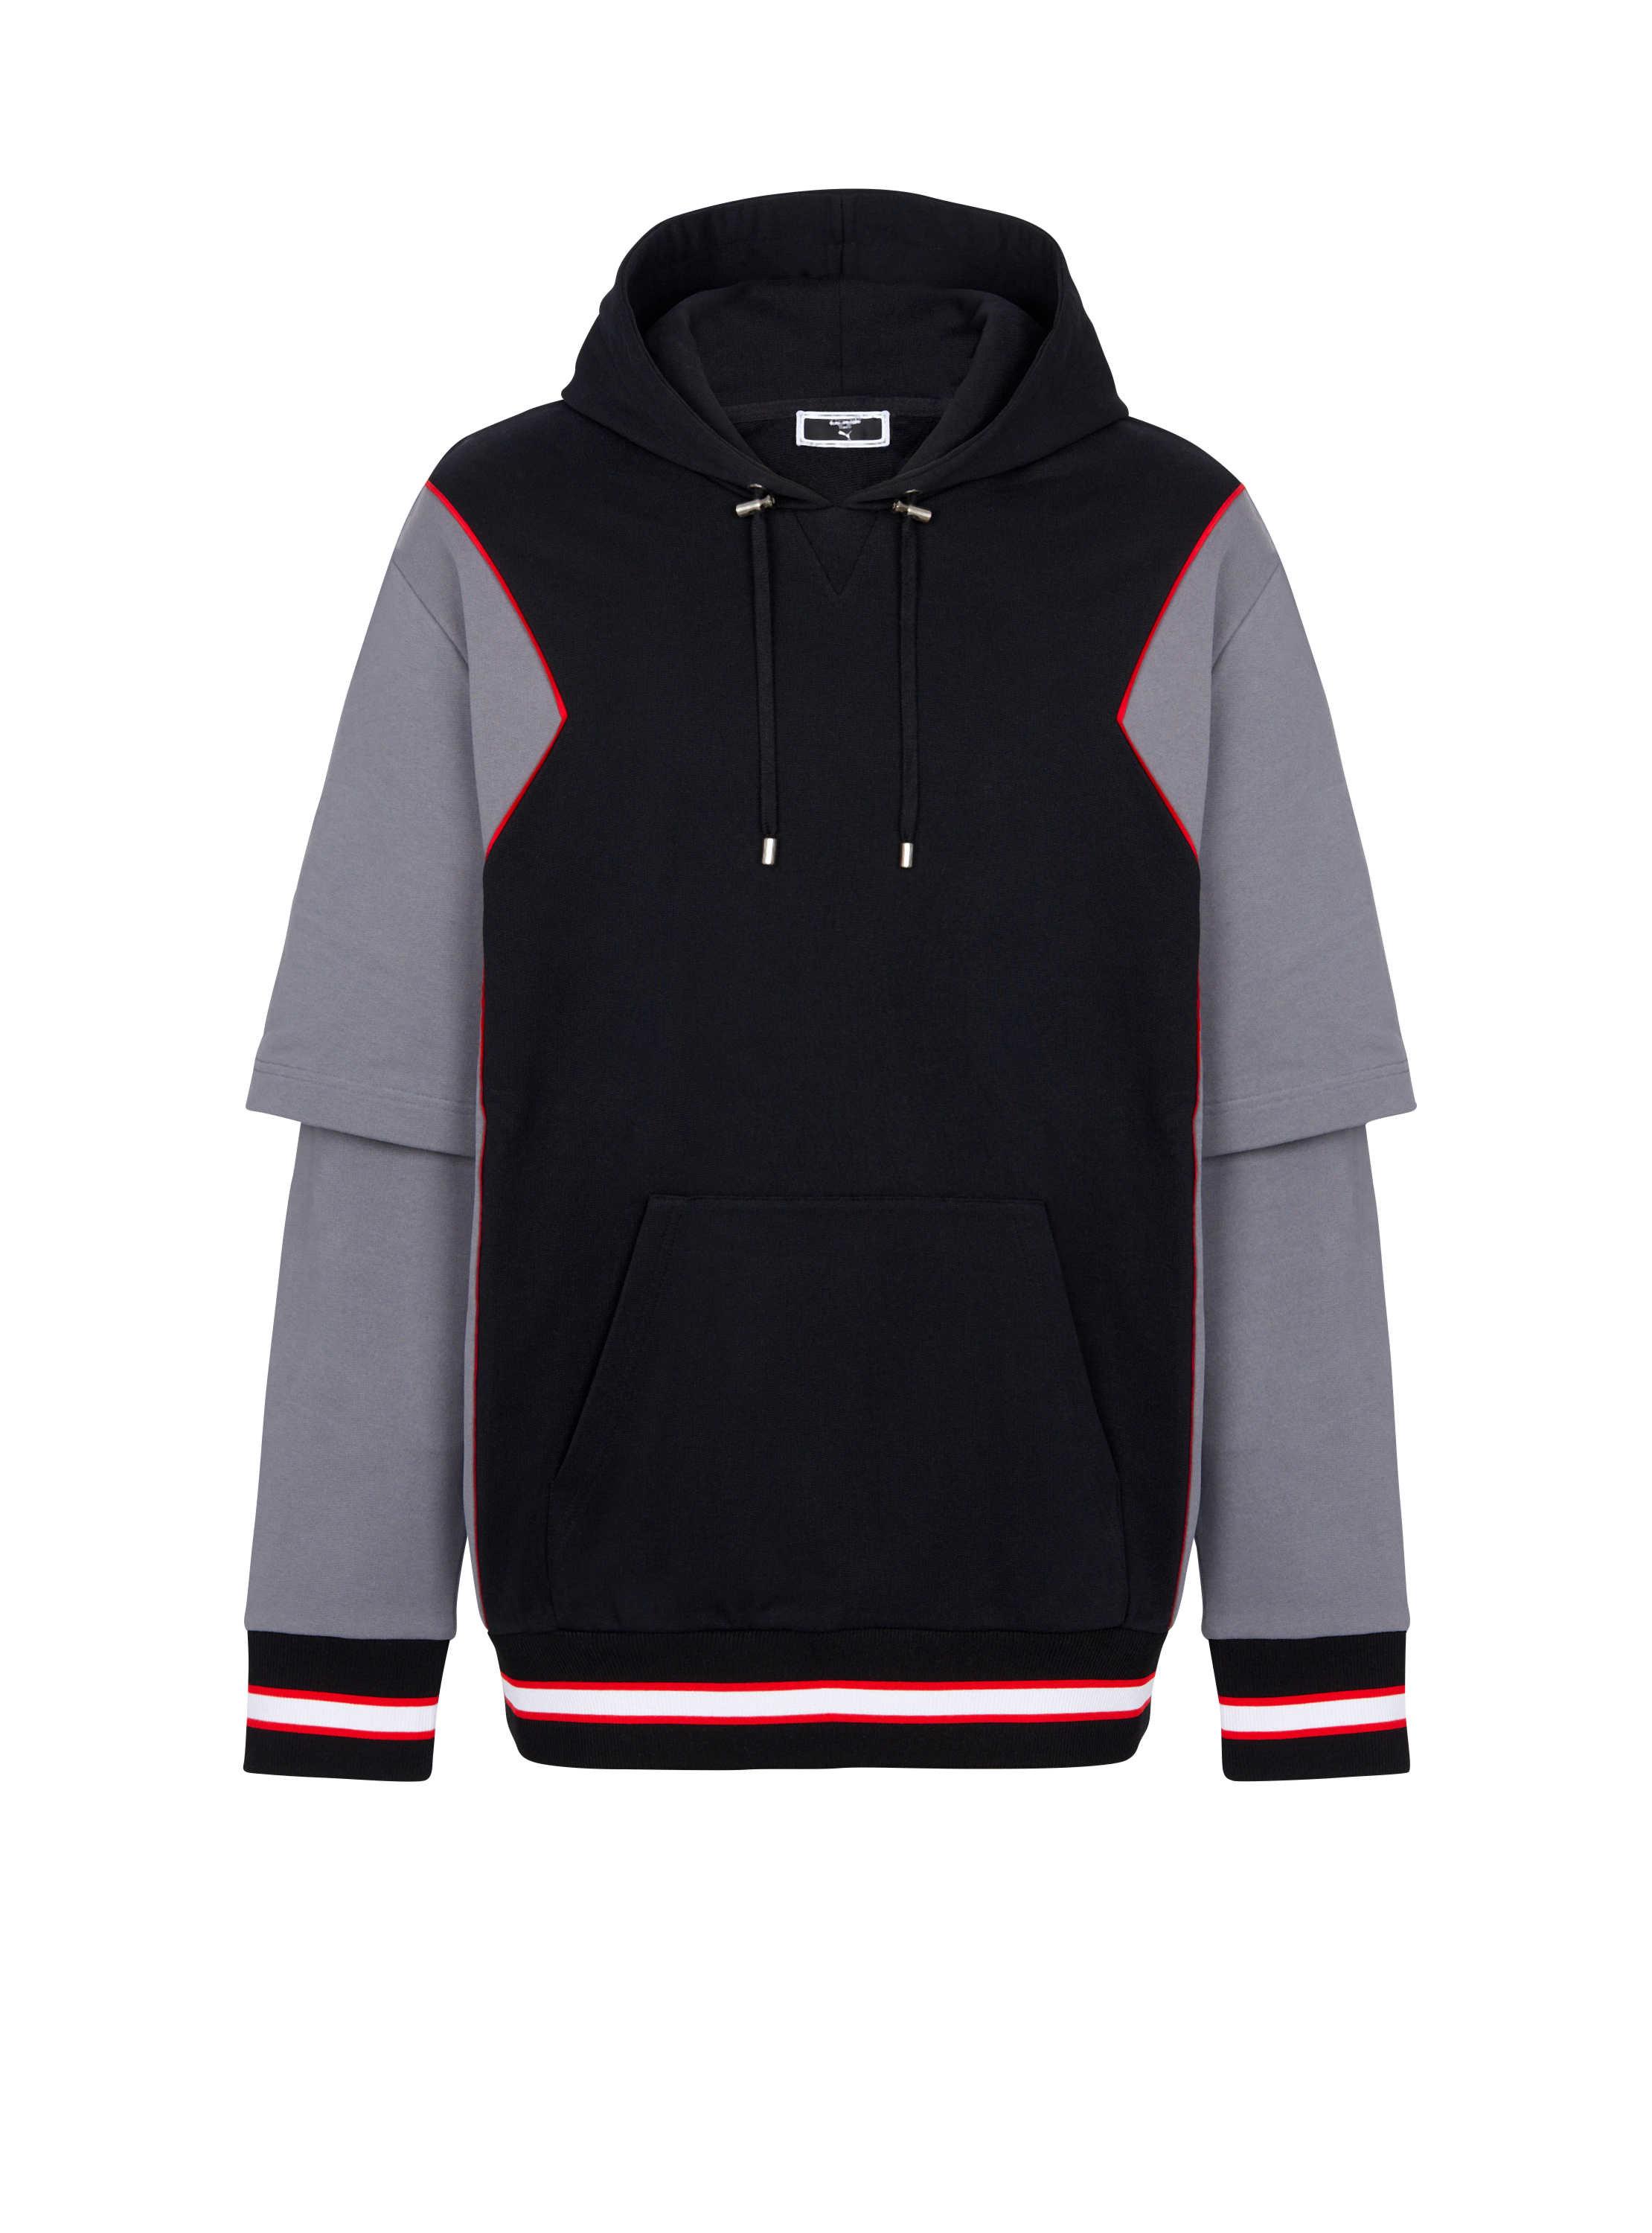 Balmain x Puma - Oversized basketball hoodie, black, hi-res